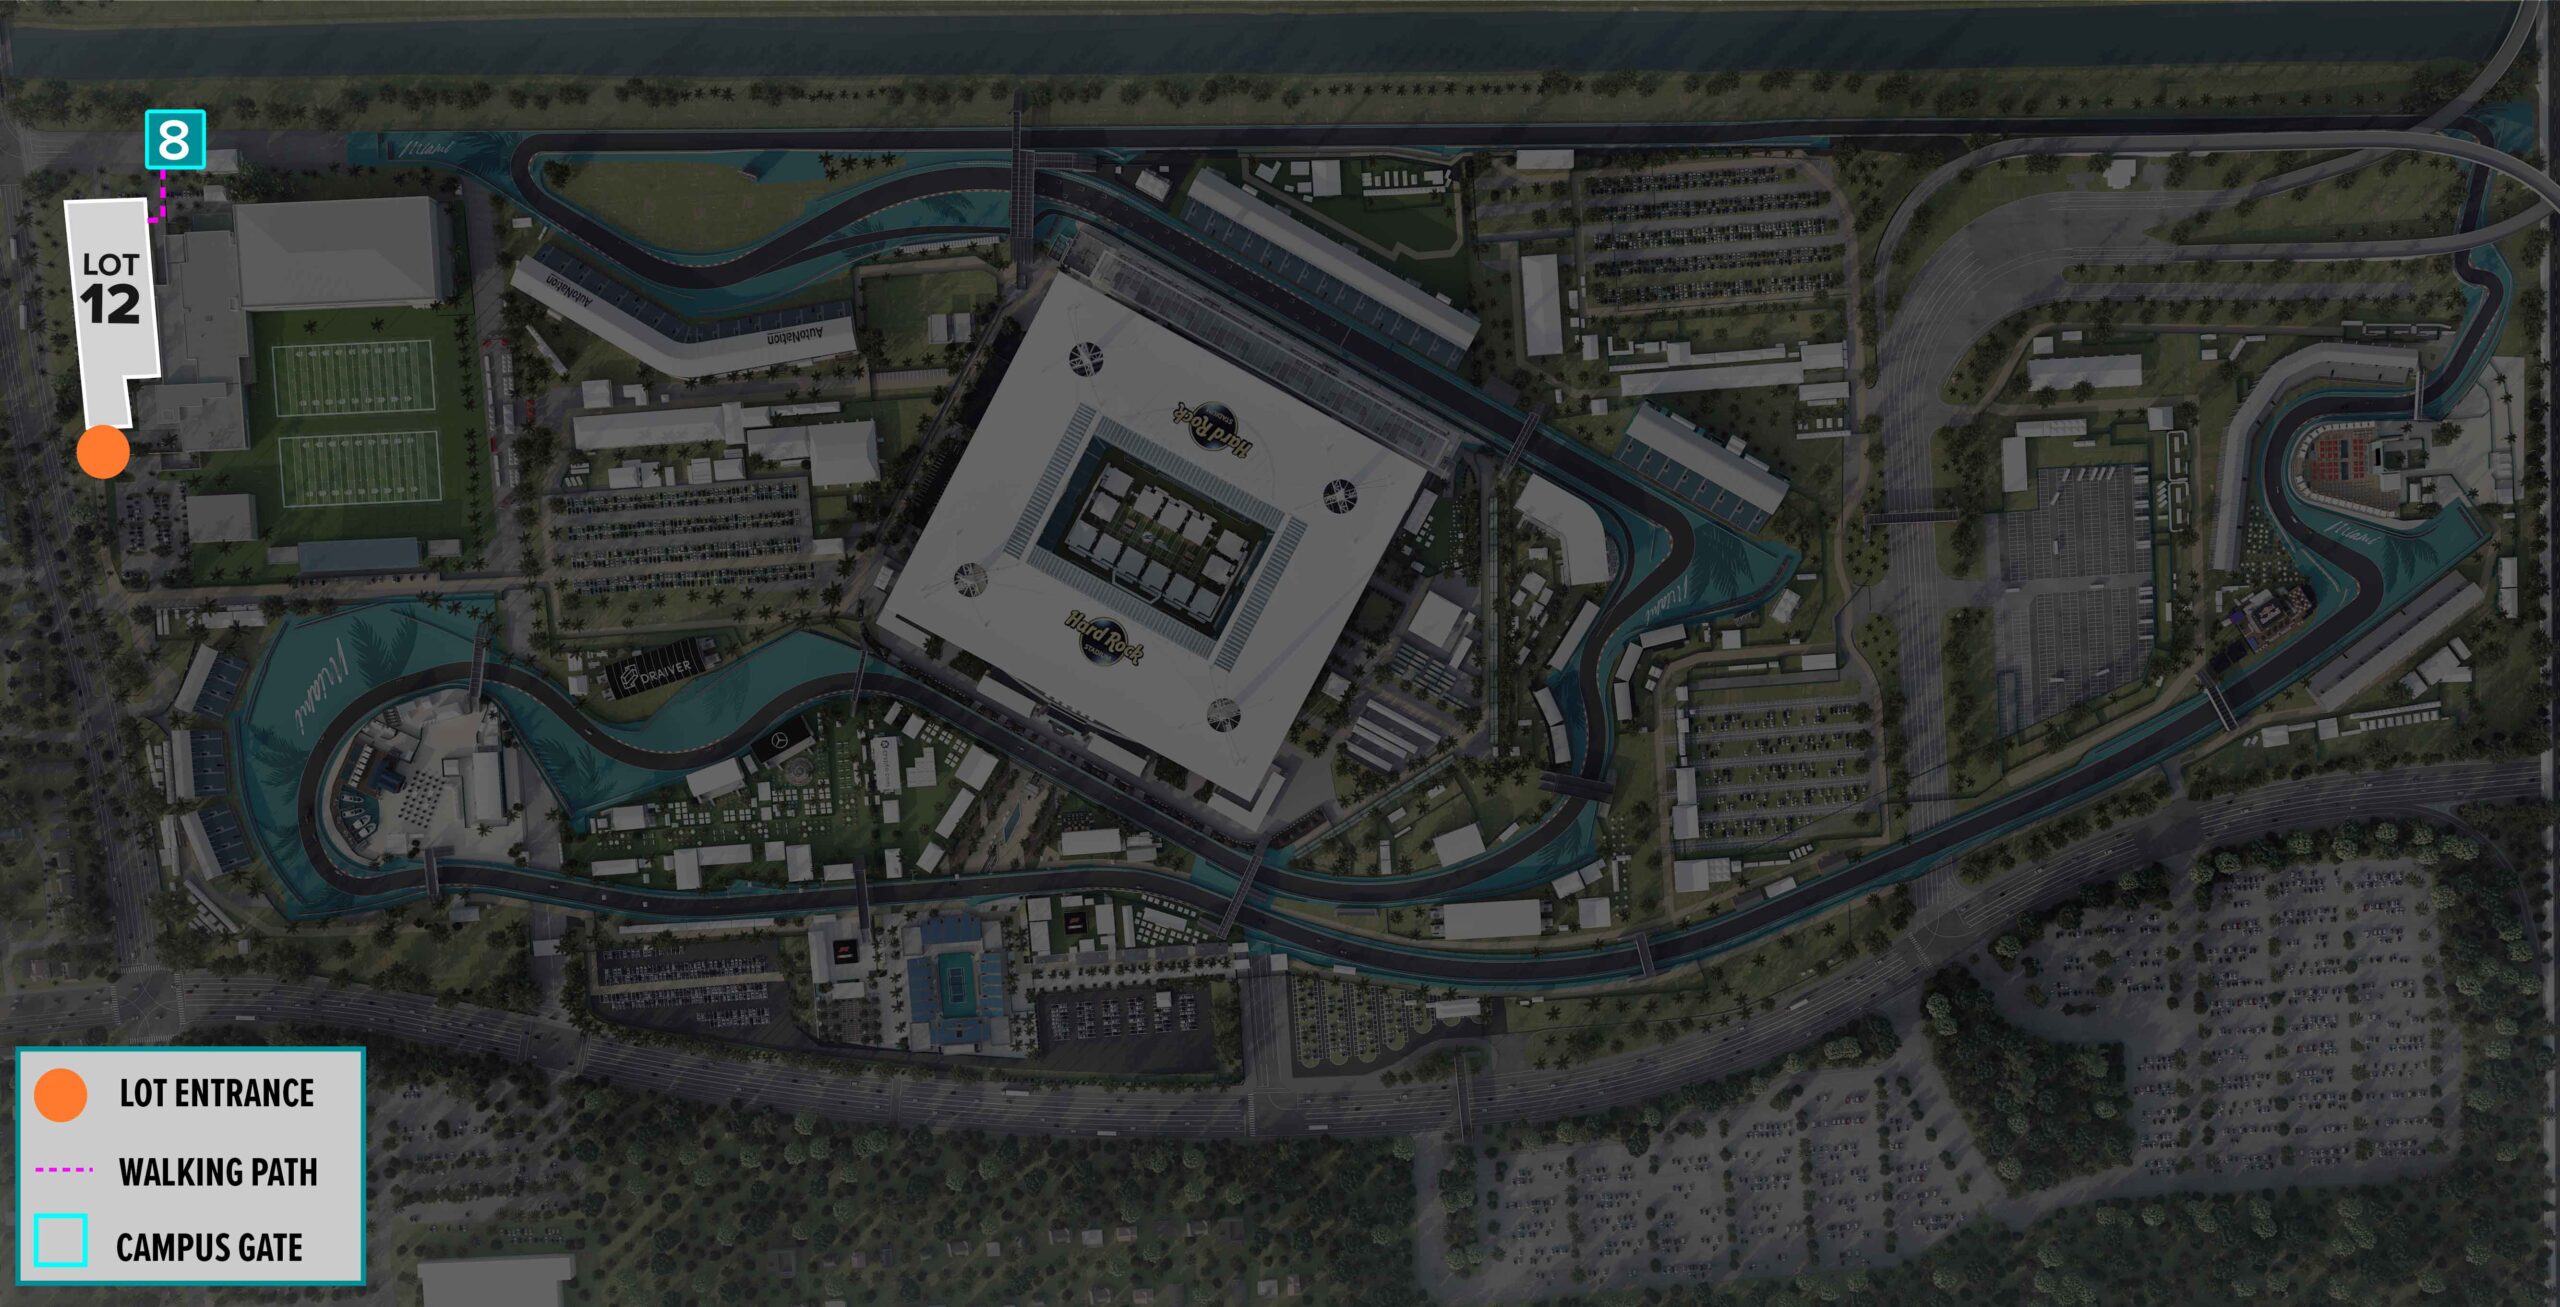 Parking Lot Location Map for Gray Lot 12 at the Formula 1 Crypto.com Miami Grand Prix